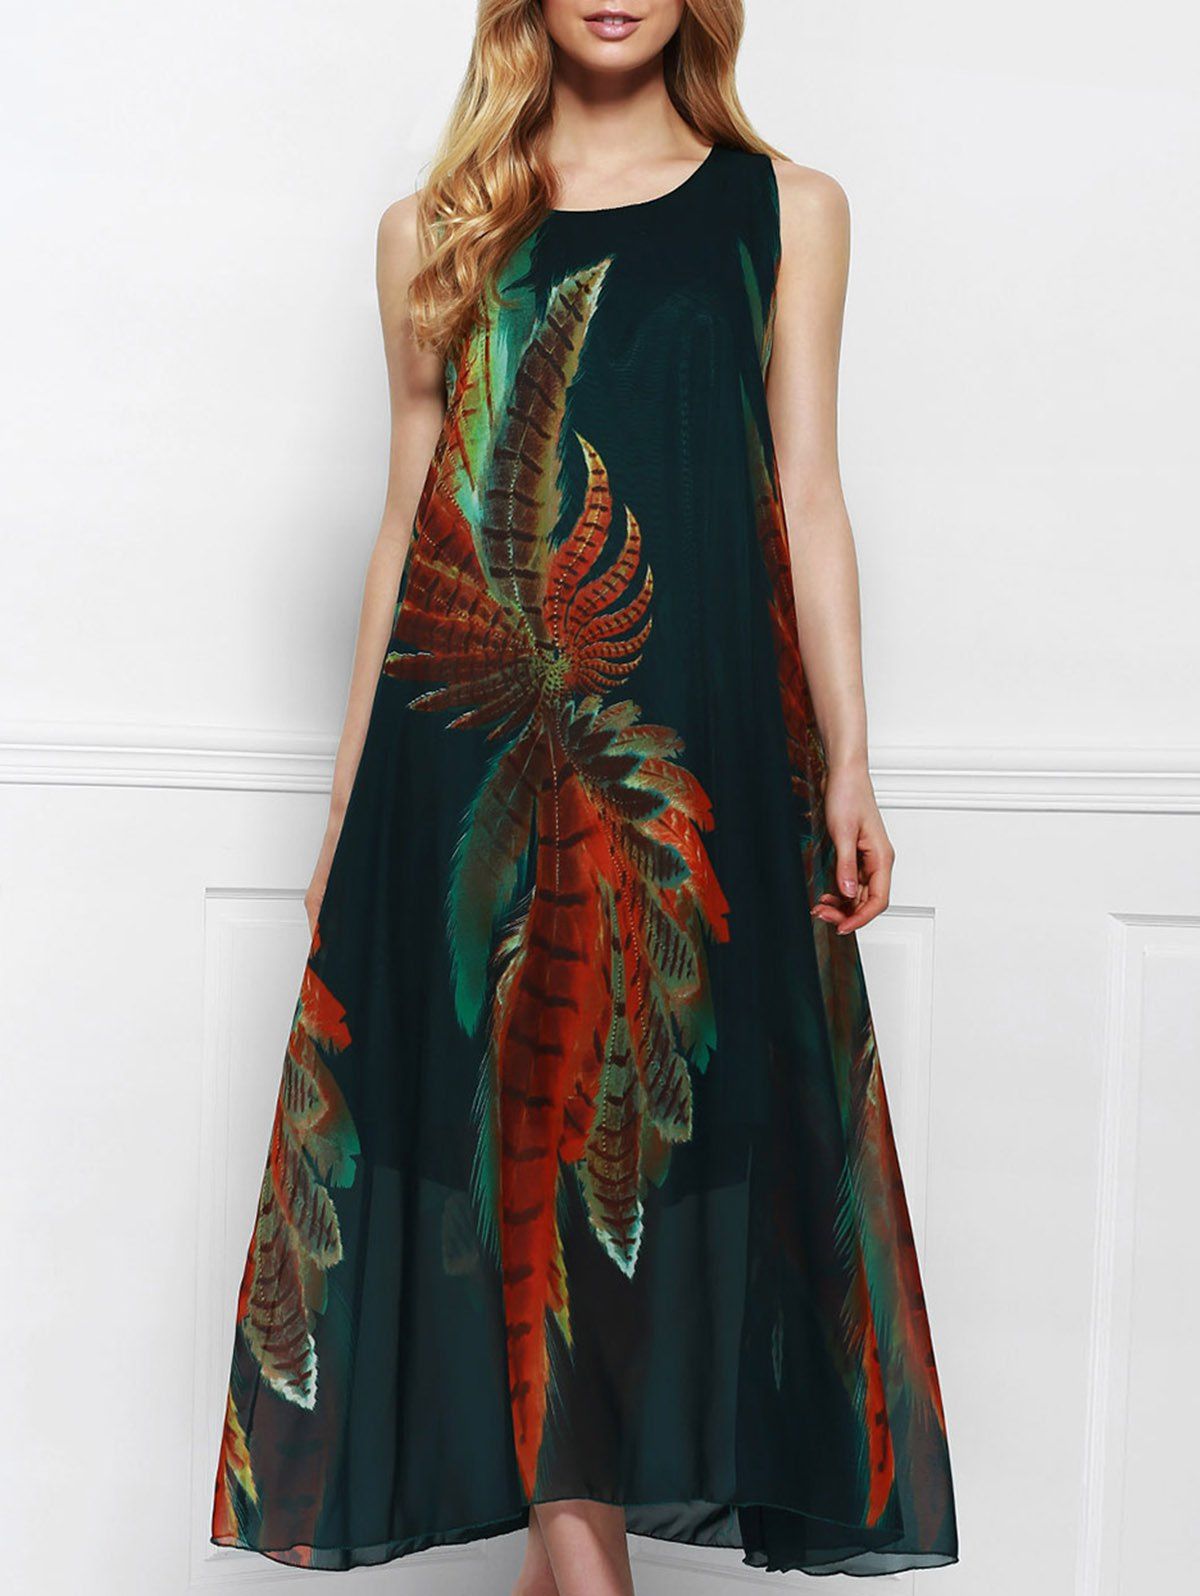 [7% OFF] Women's Bohemian Style Print Sleeveless Scoop Neck Dress | Rosegal